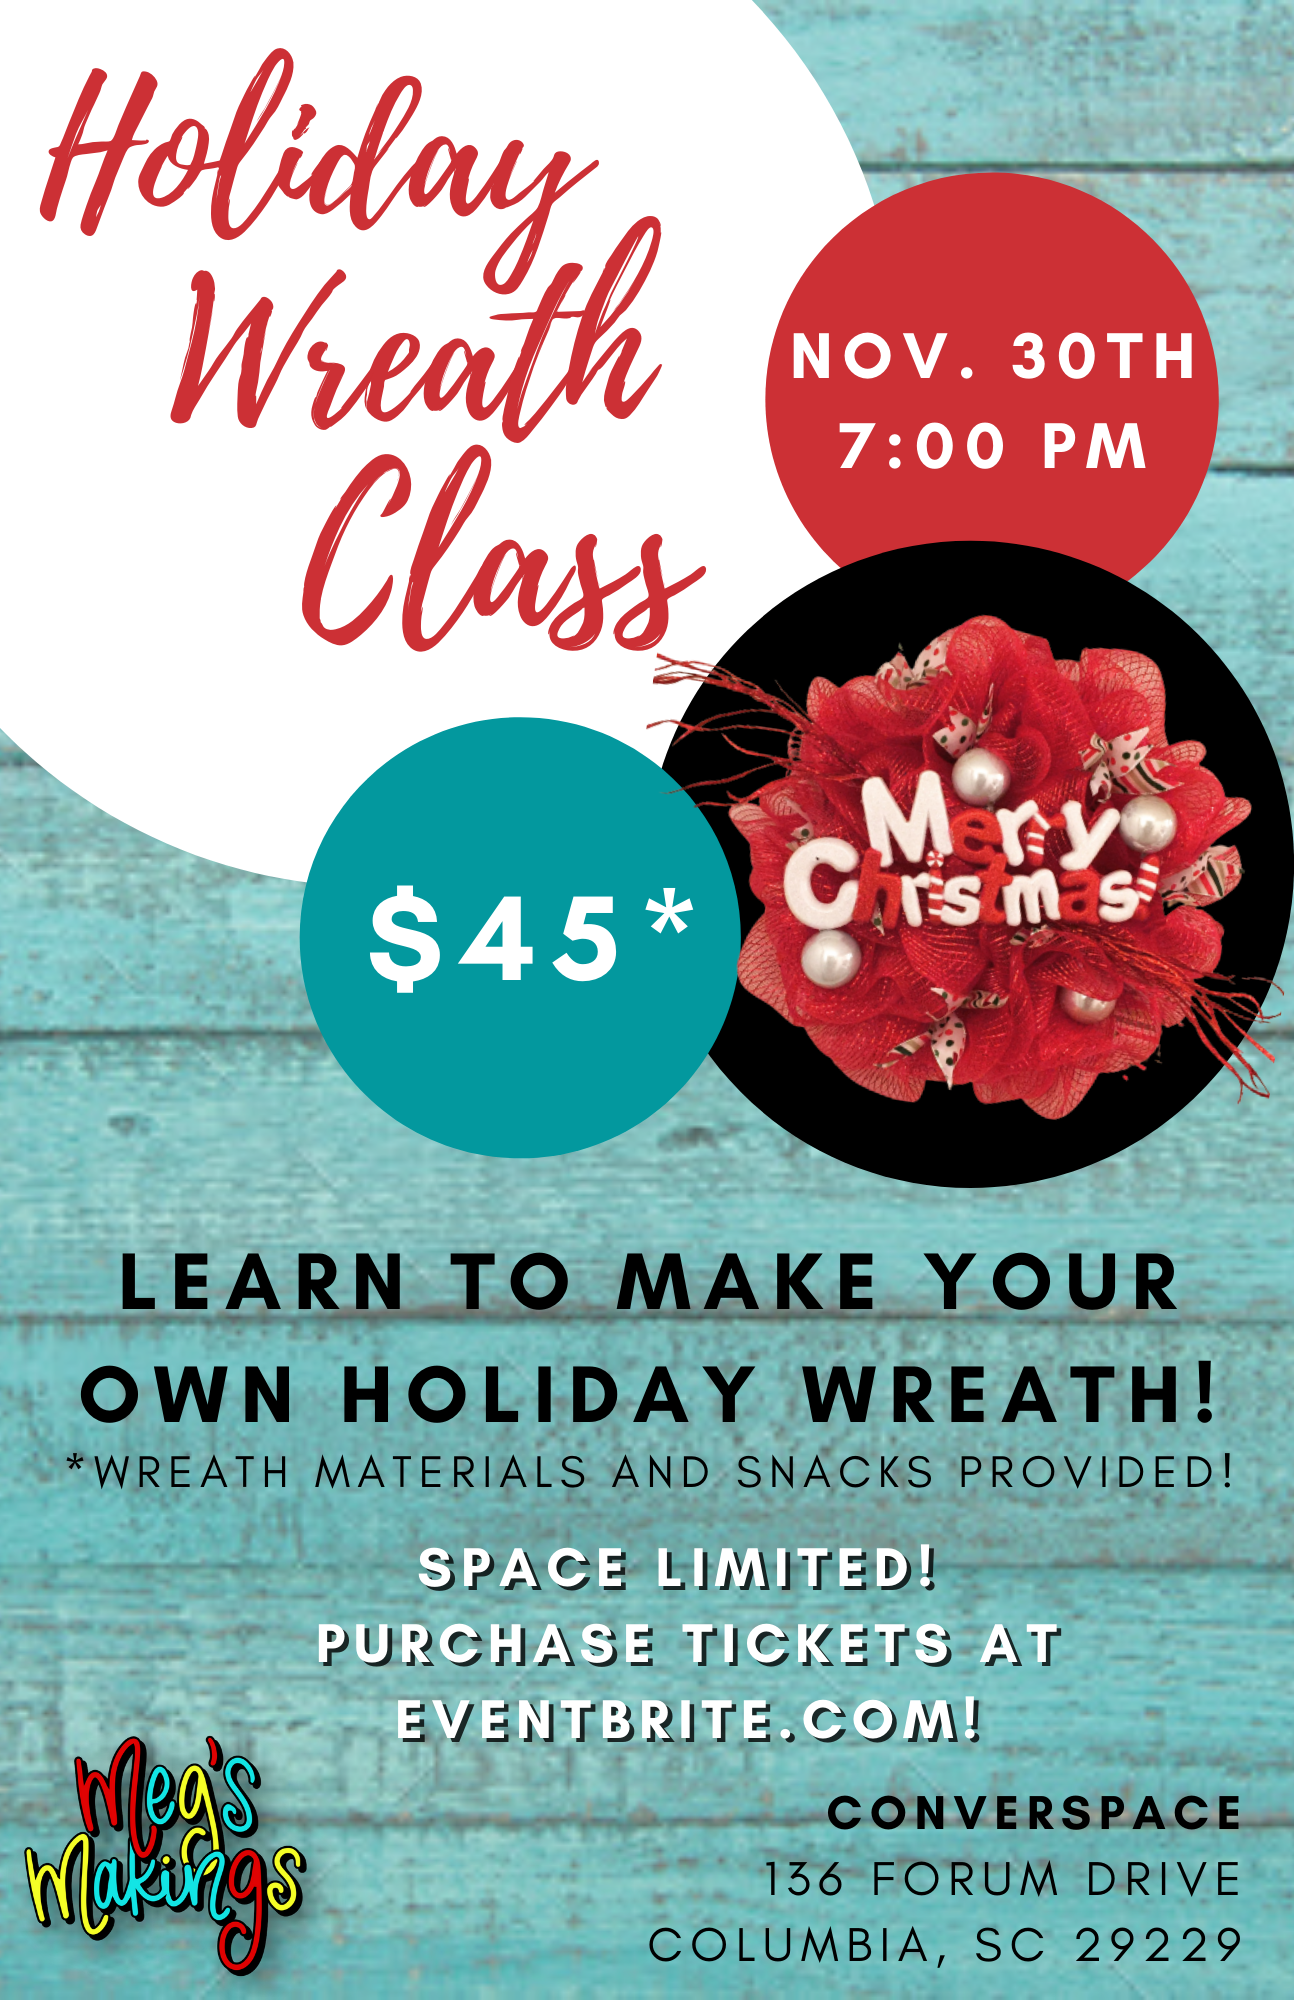 Holiday Wreath Class Flyer